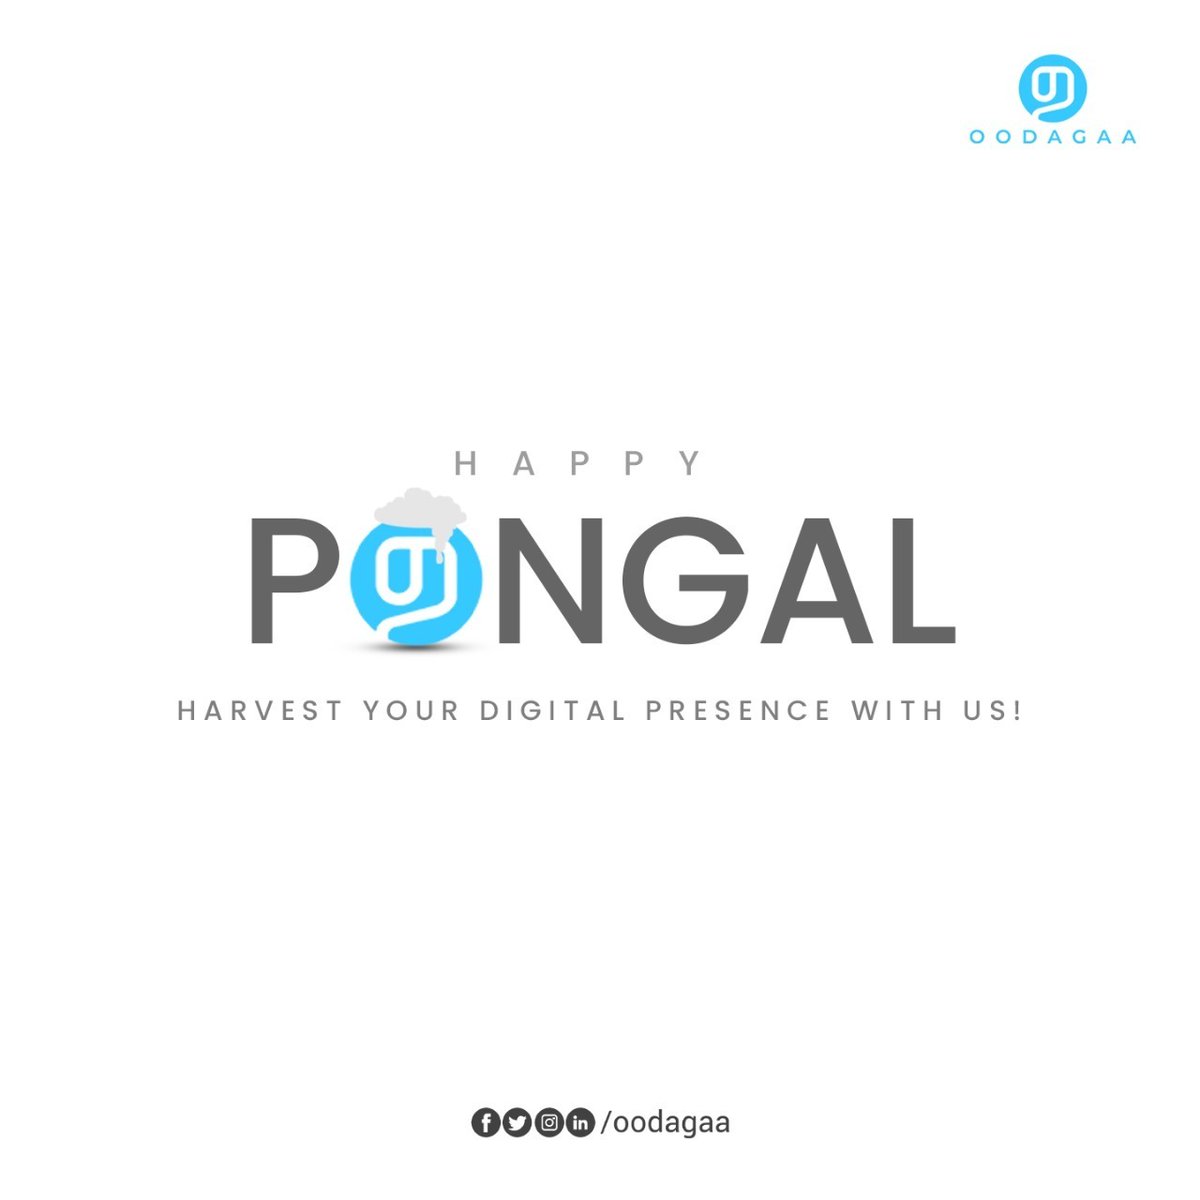 Wishing you the perfect Pongal with an overflowing digital presence! #Pongal2023 #HappyPongal #DigitalMarketing #socialmediamarketing